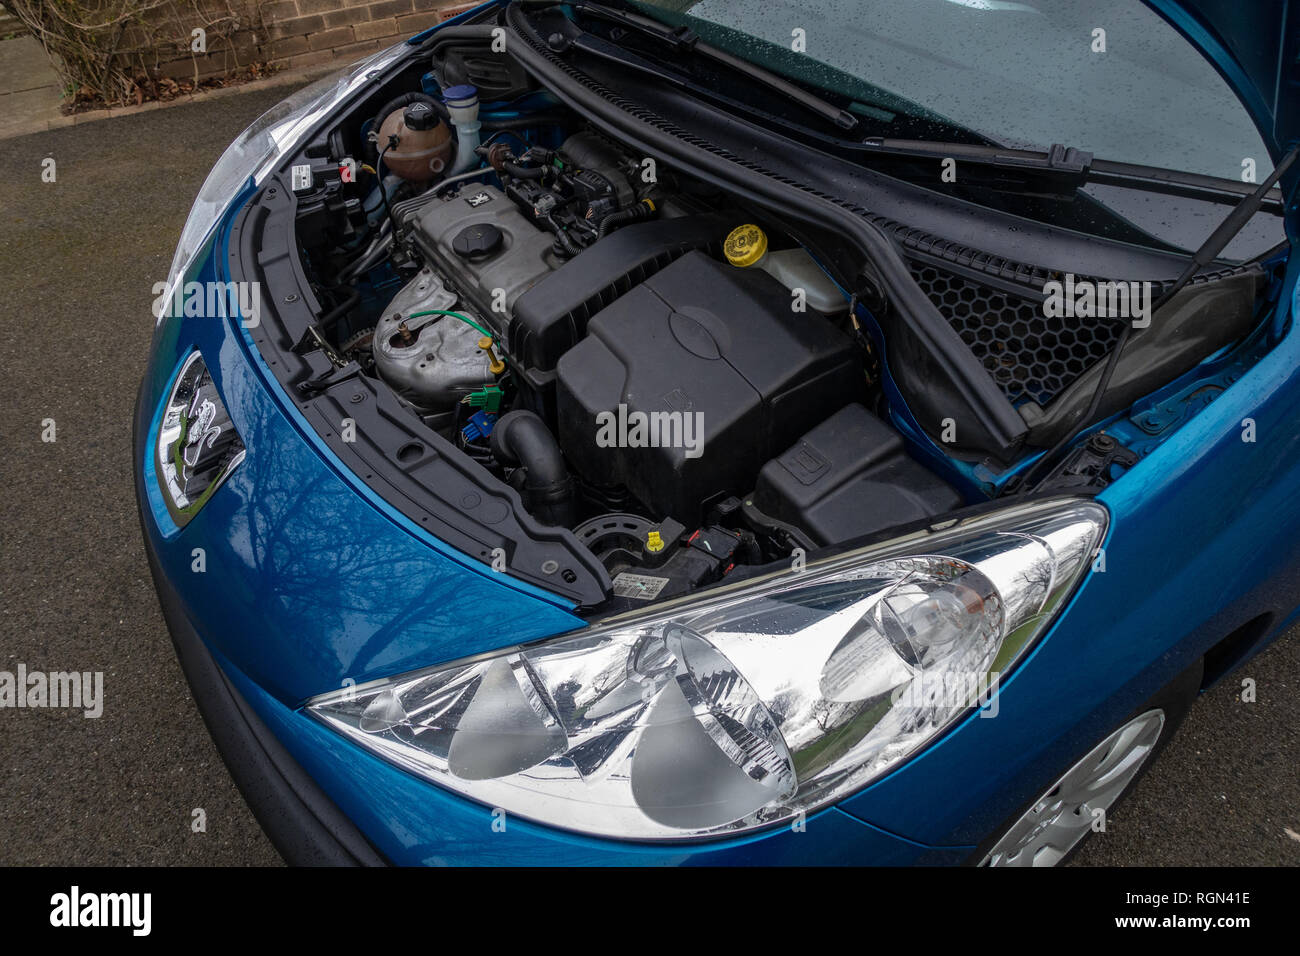 Die geöffnete Motorhaube Motorhaube mit einem Peugeot 207 Auto Motor in  England Stockfotografie - Alamy